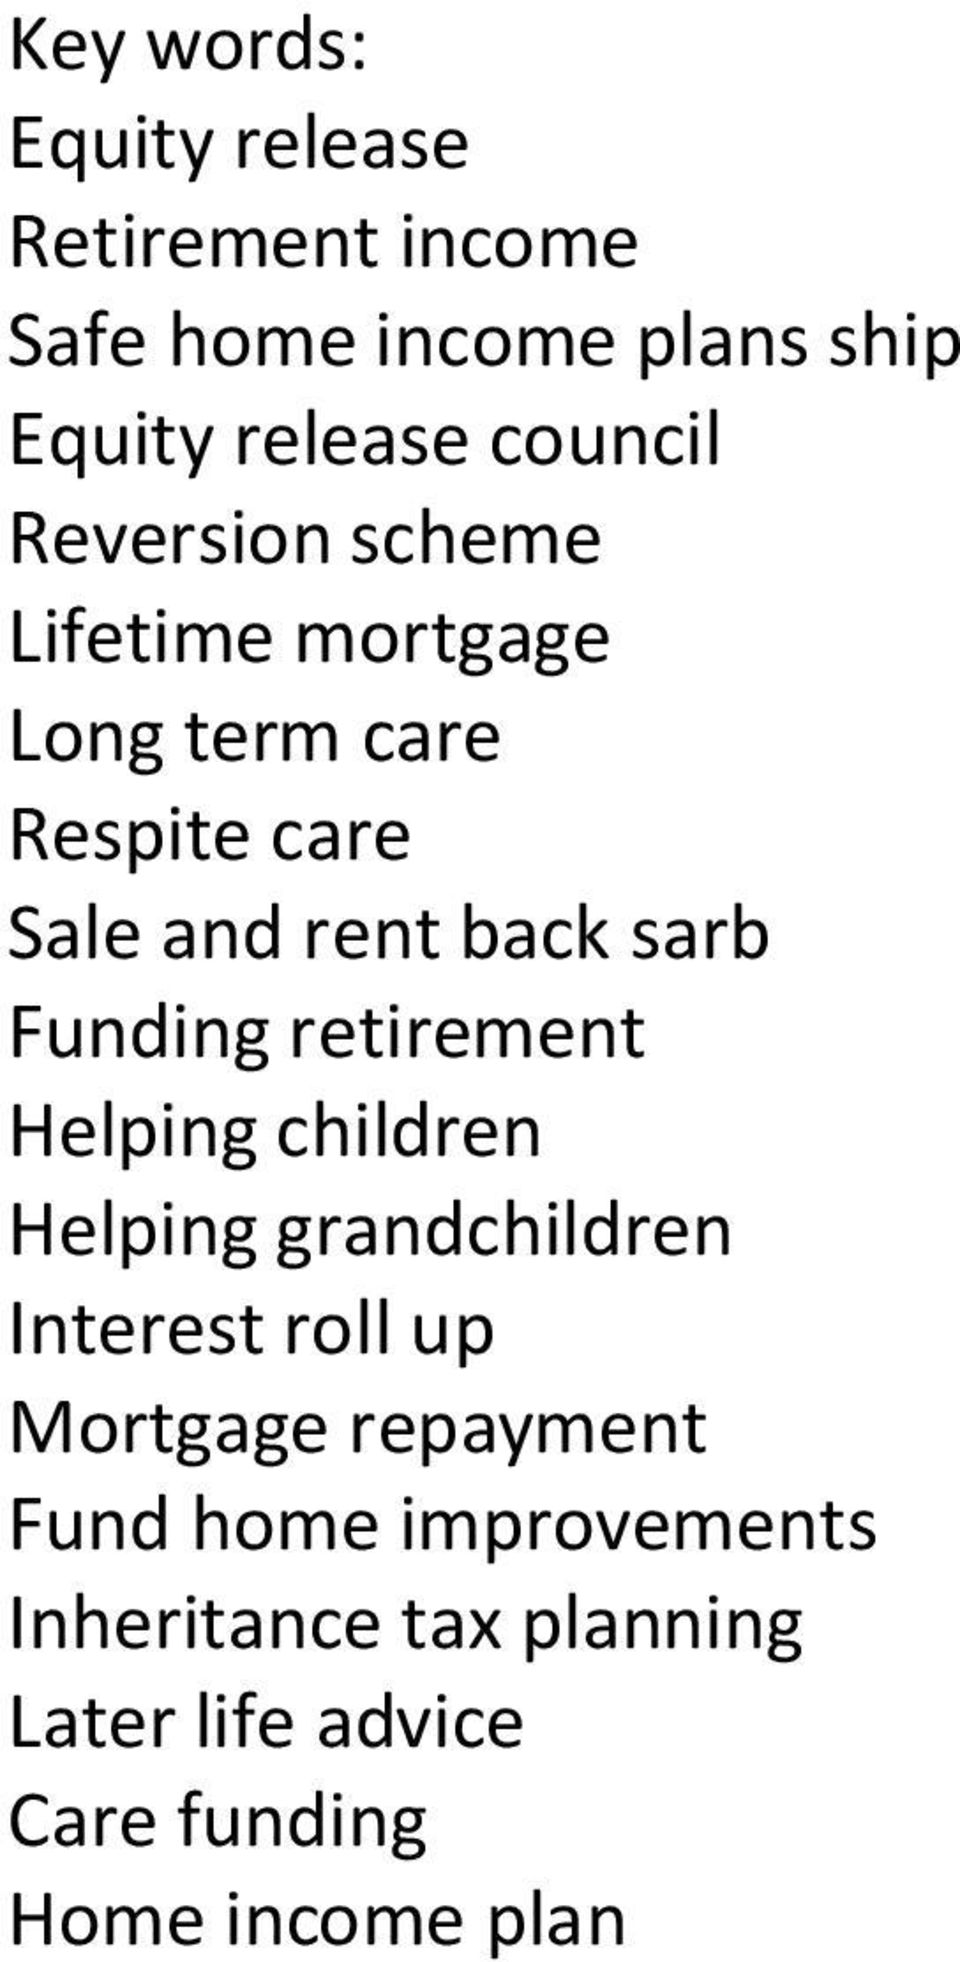 sarb Funding retirement Helping children Helping grandchildren Interest roll up Mortgage